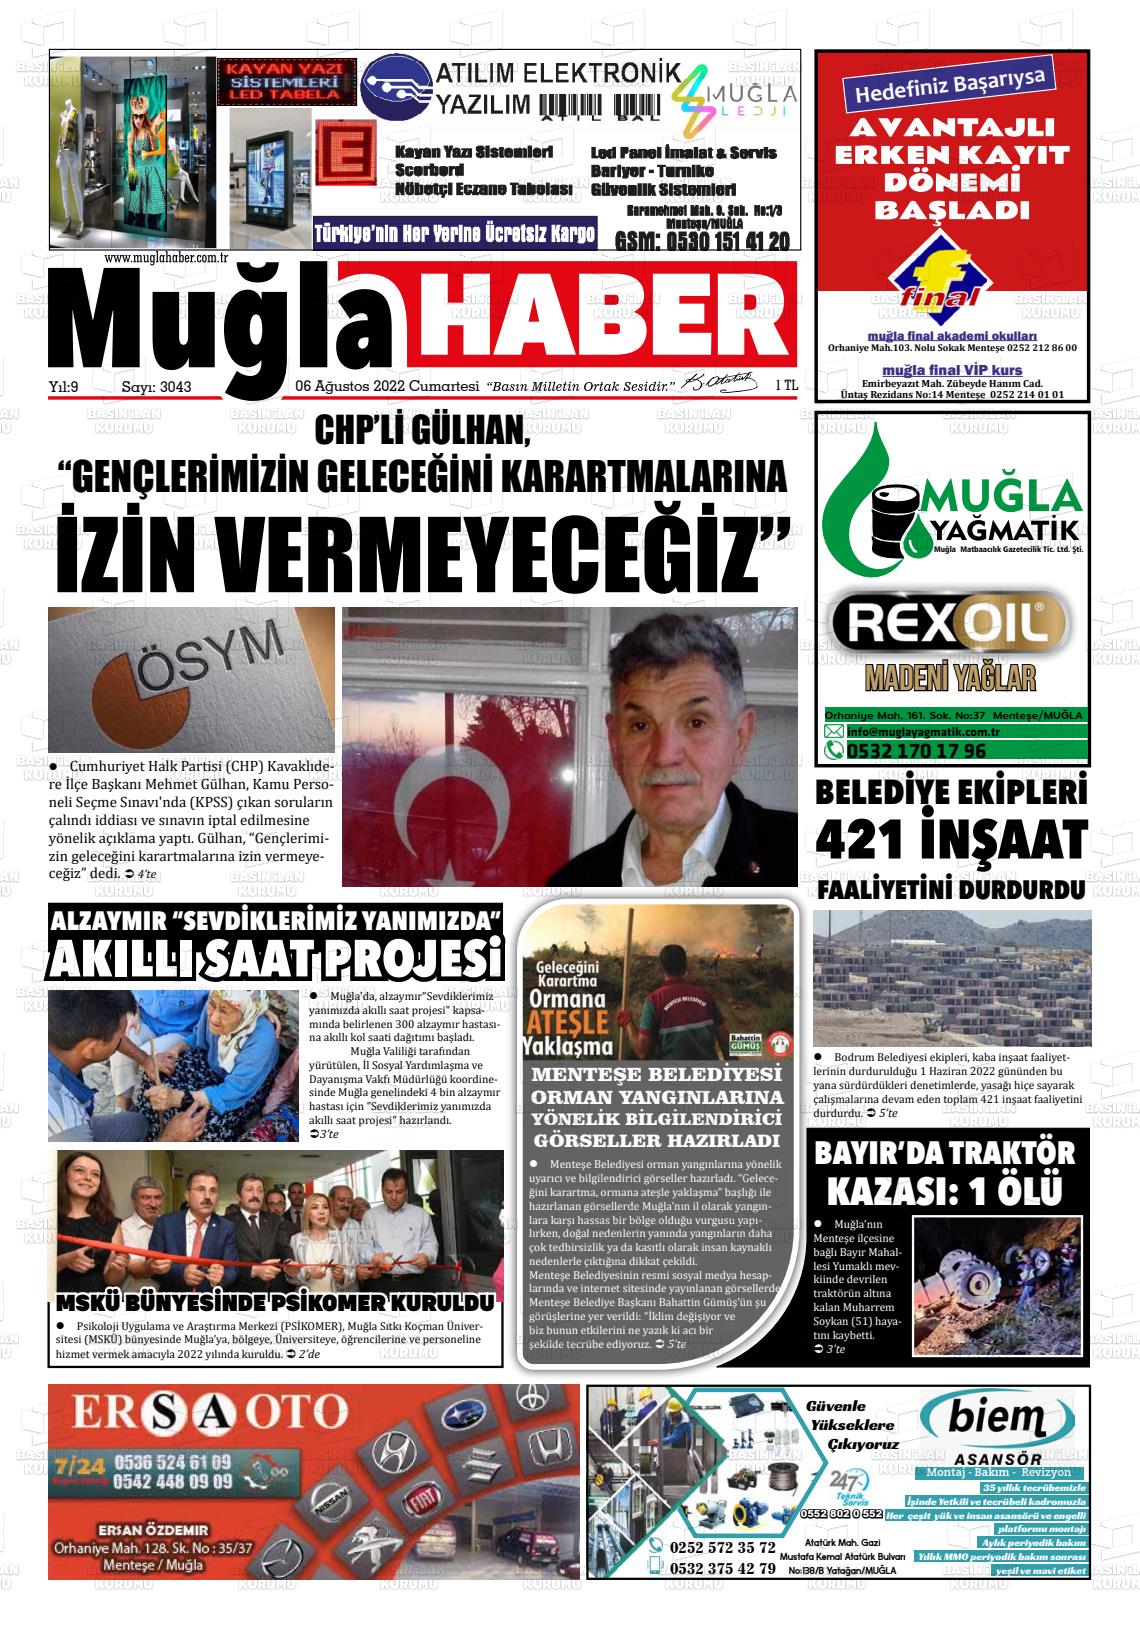 06 Ağustos 2022 Muğla Haber Gazete Manşeti